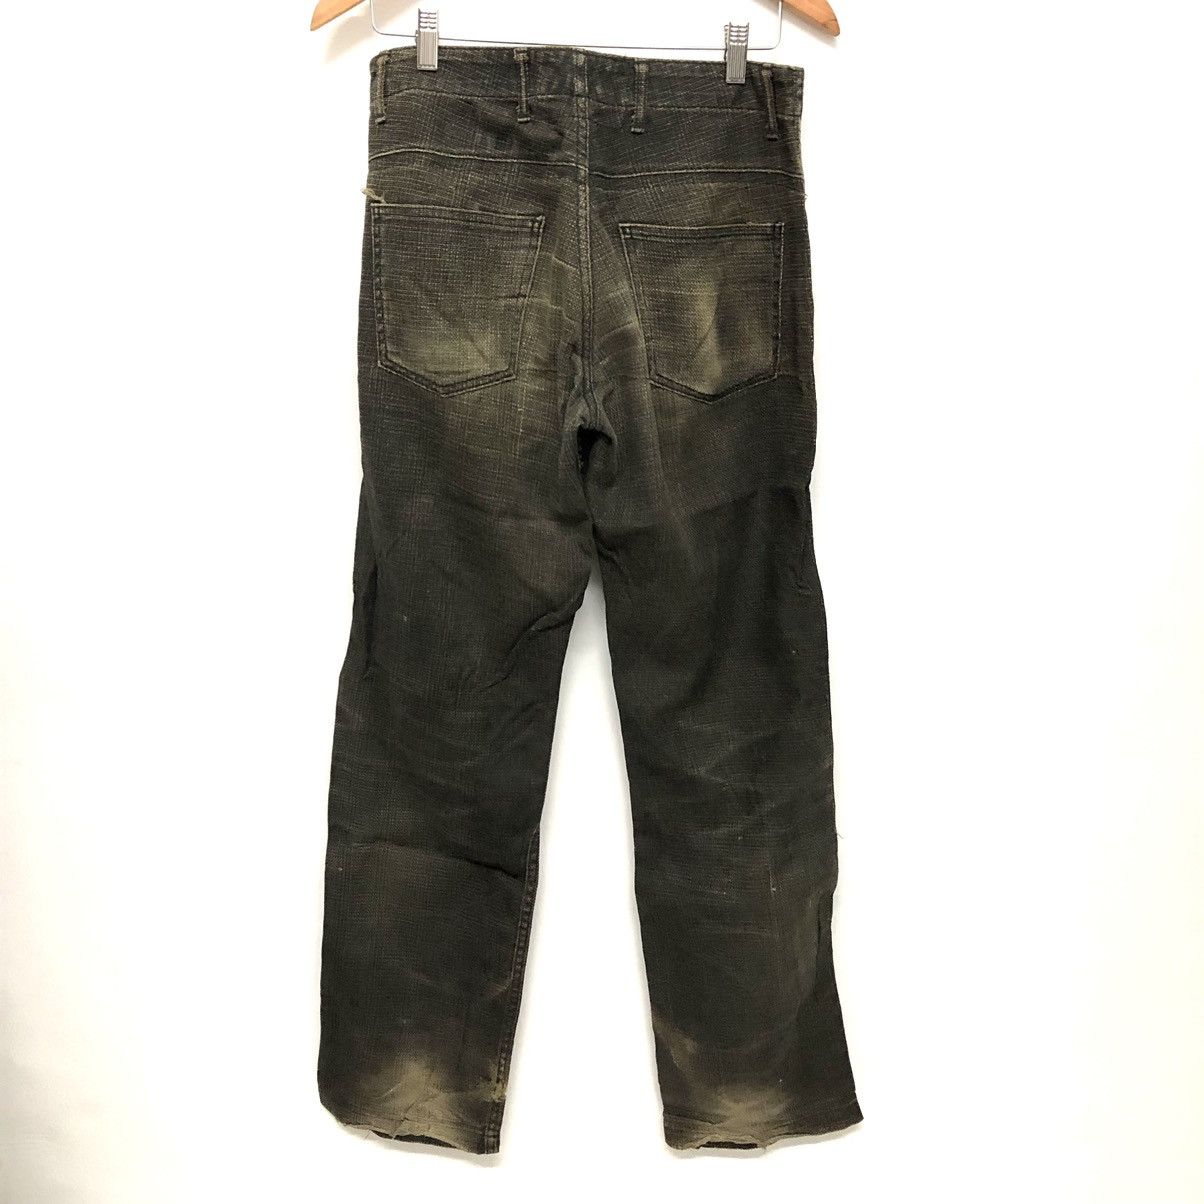 Vintage Vintage 63’ John Bull unknown Soldier Pants Size US 30 / EU 46 - 2 Preview